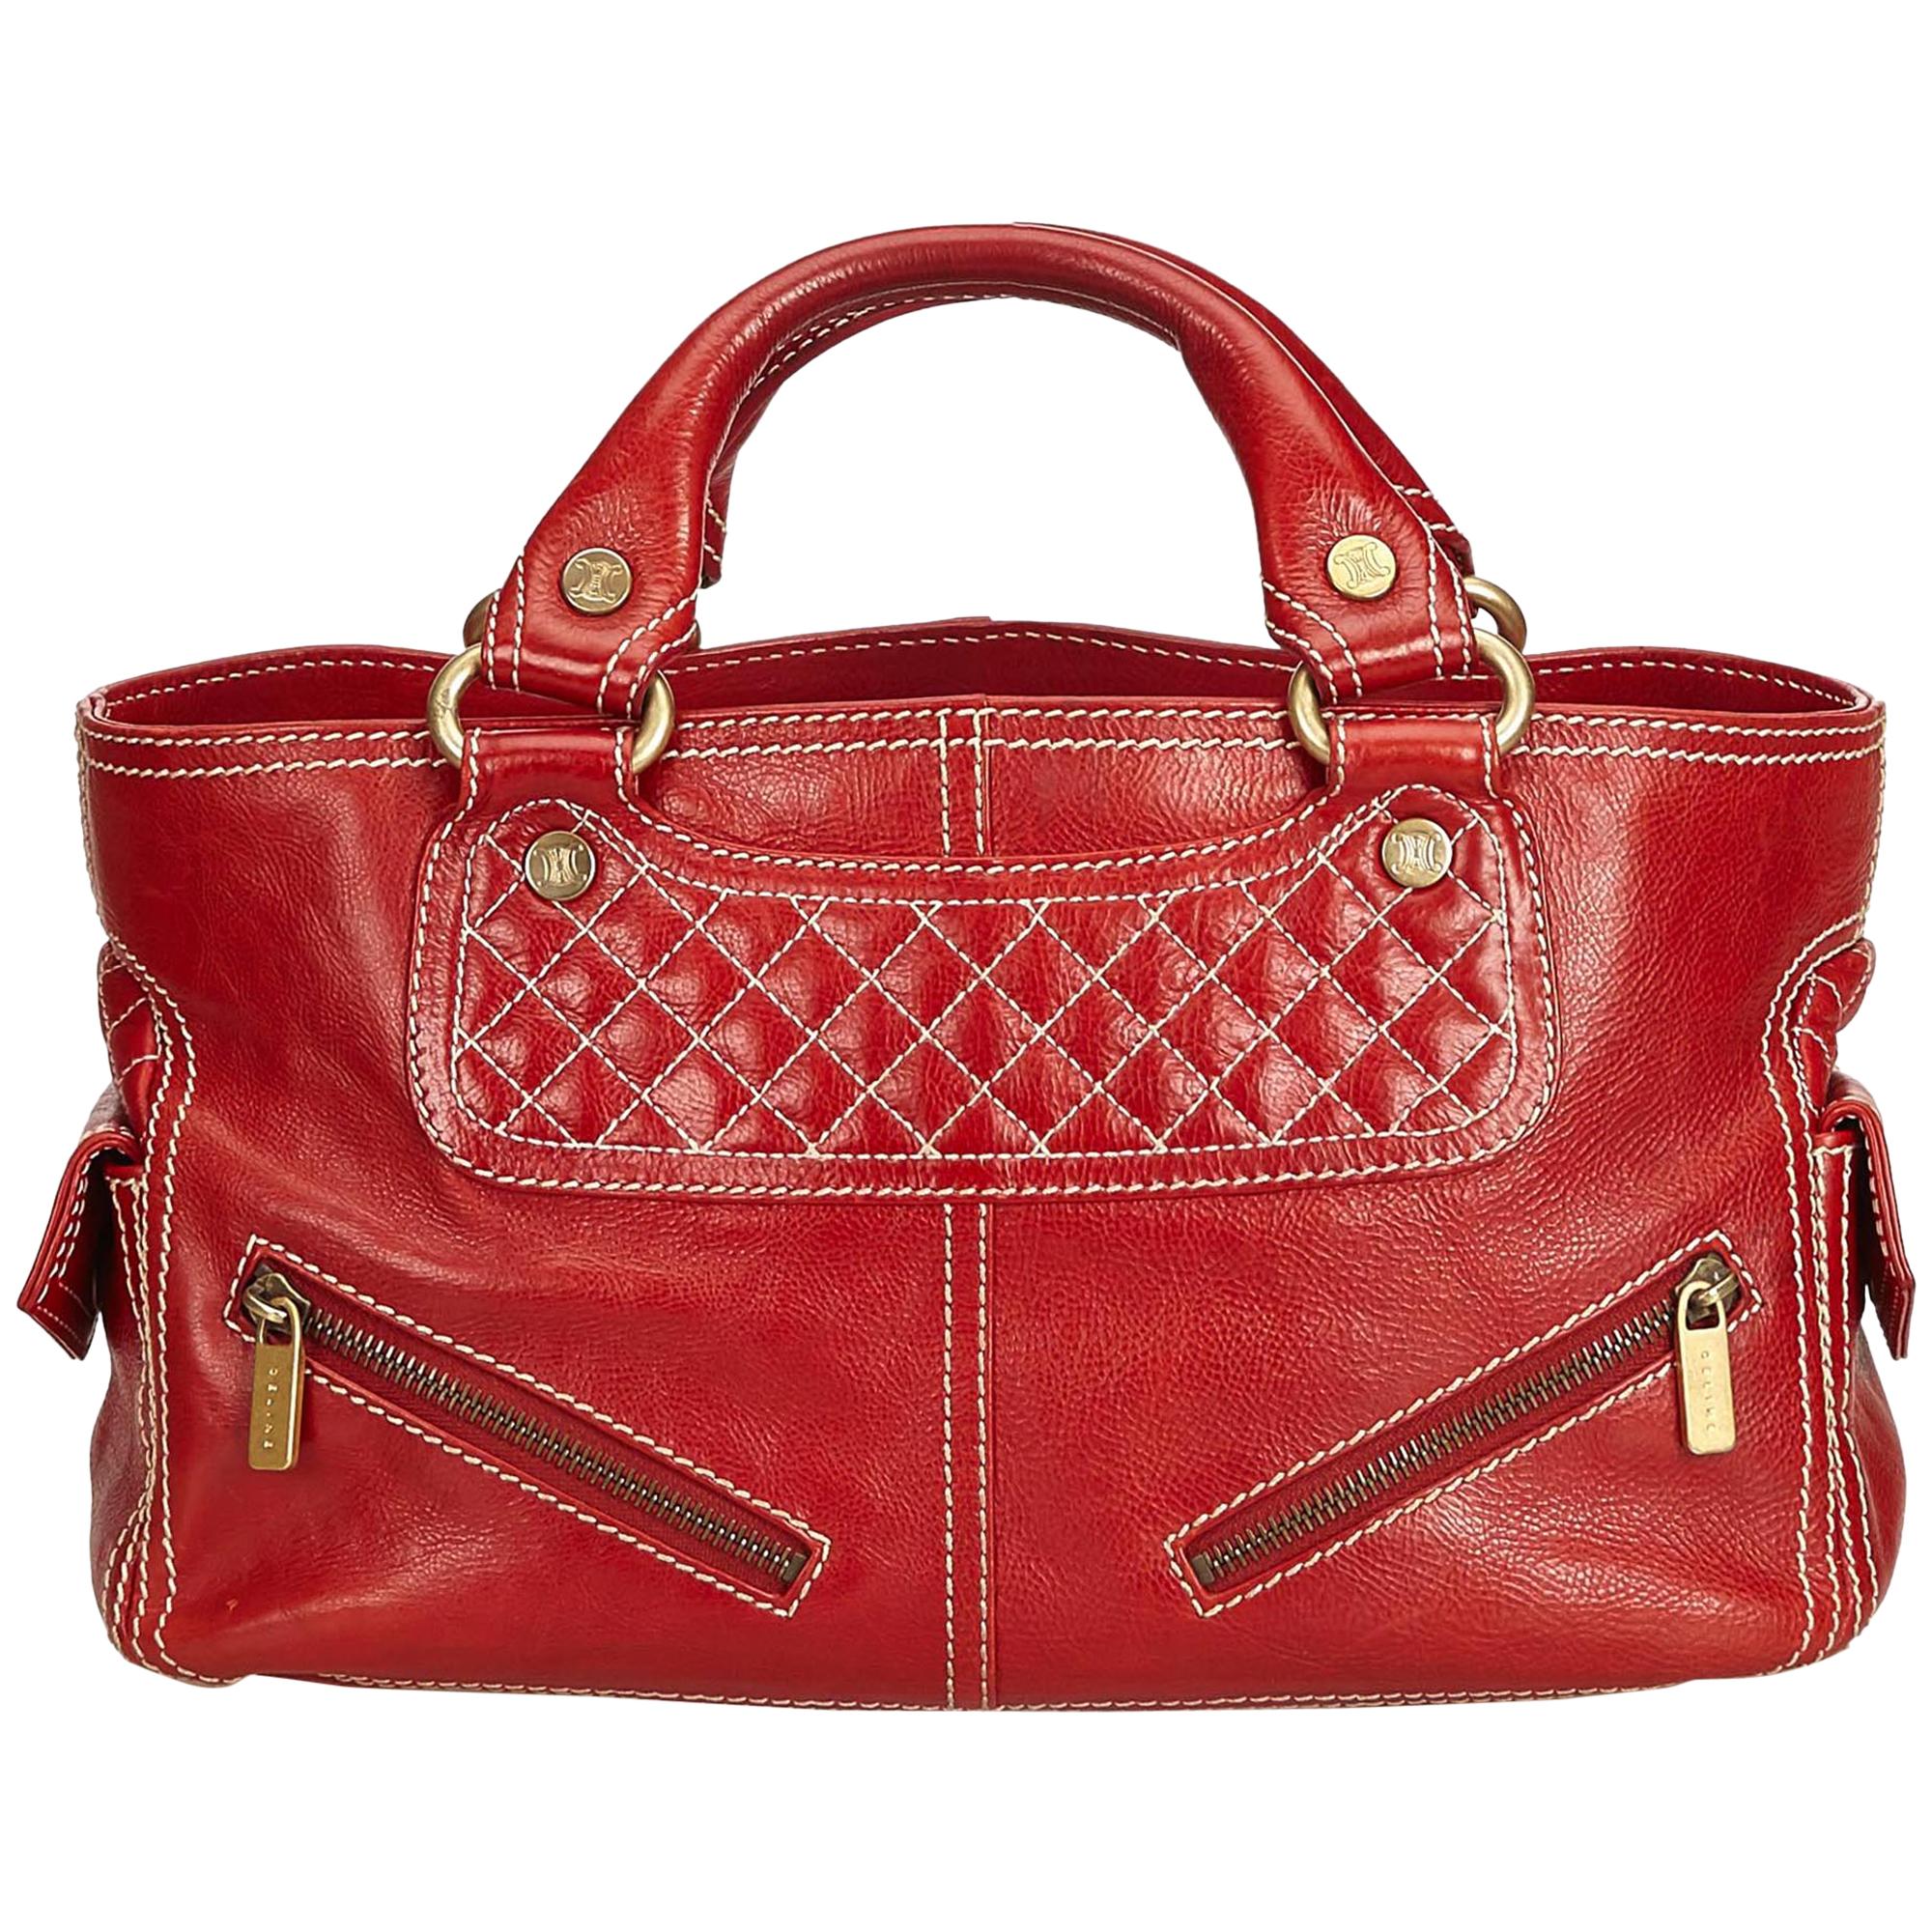 Celine Red Leather Boogie Bag For Sale